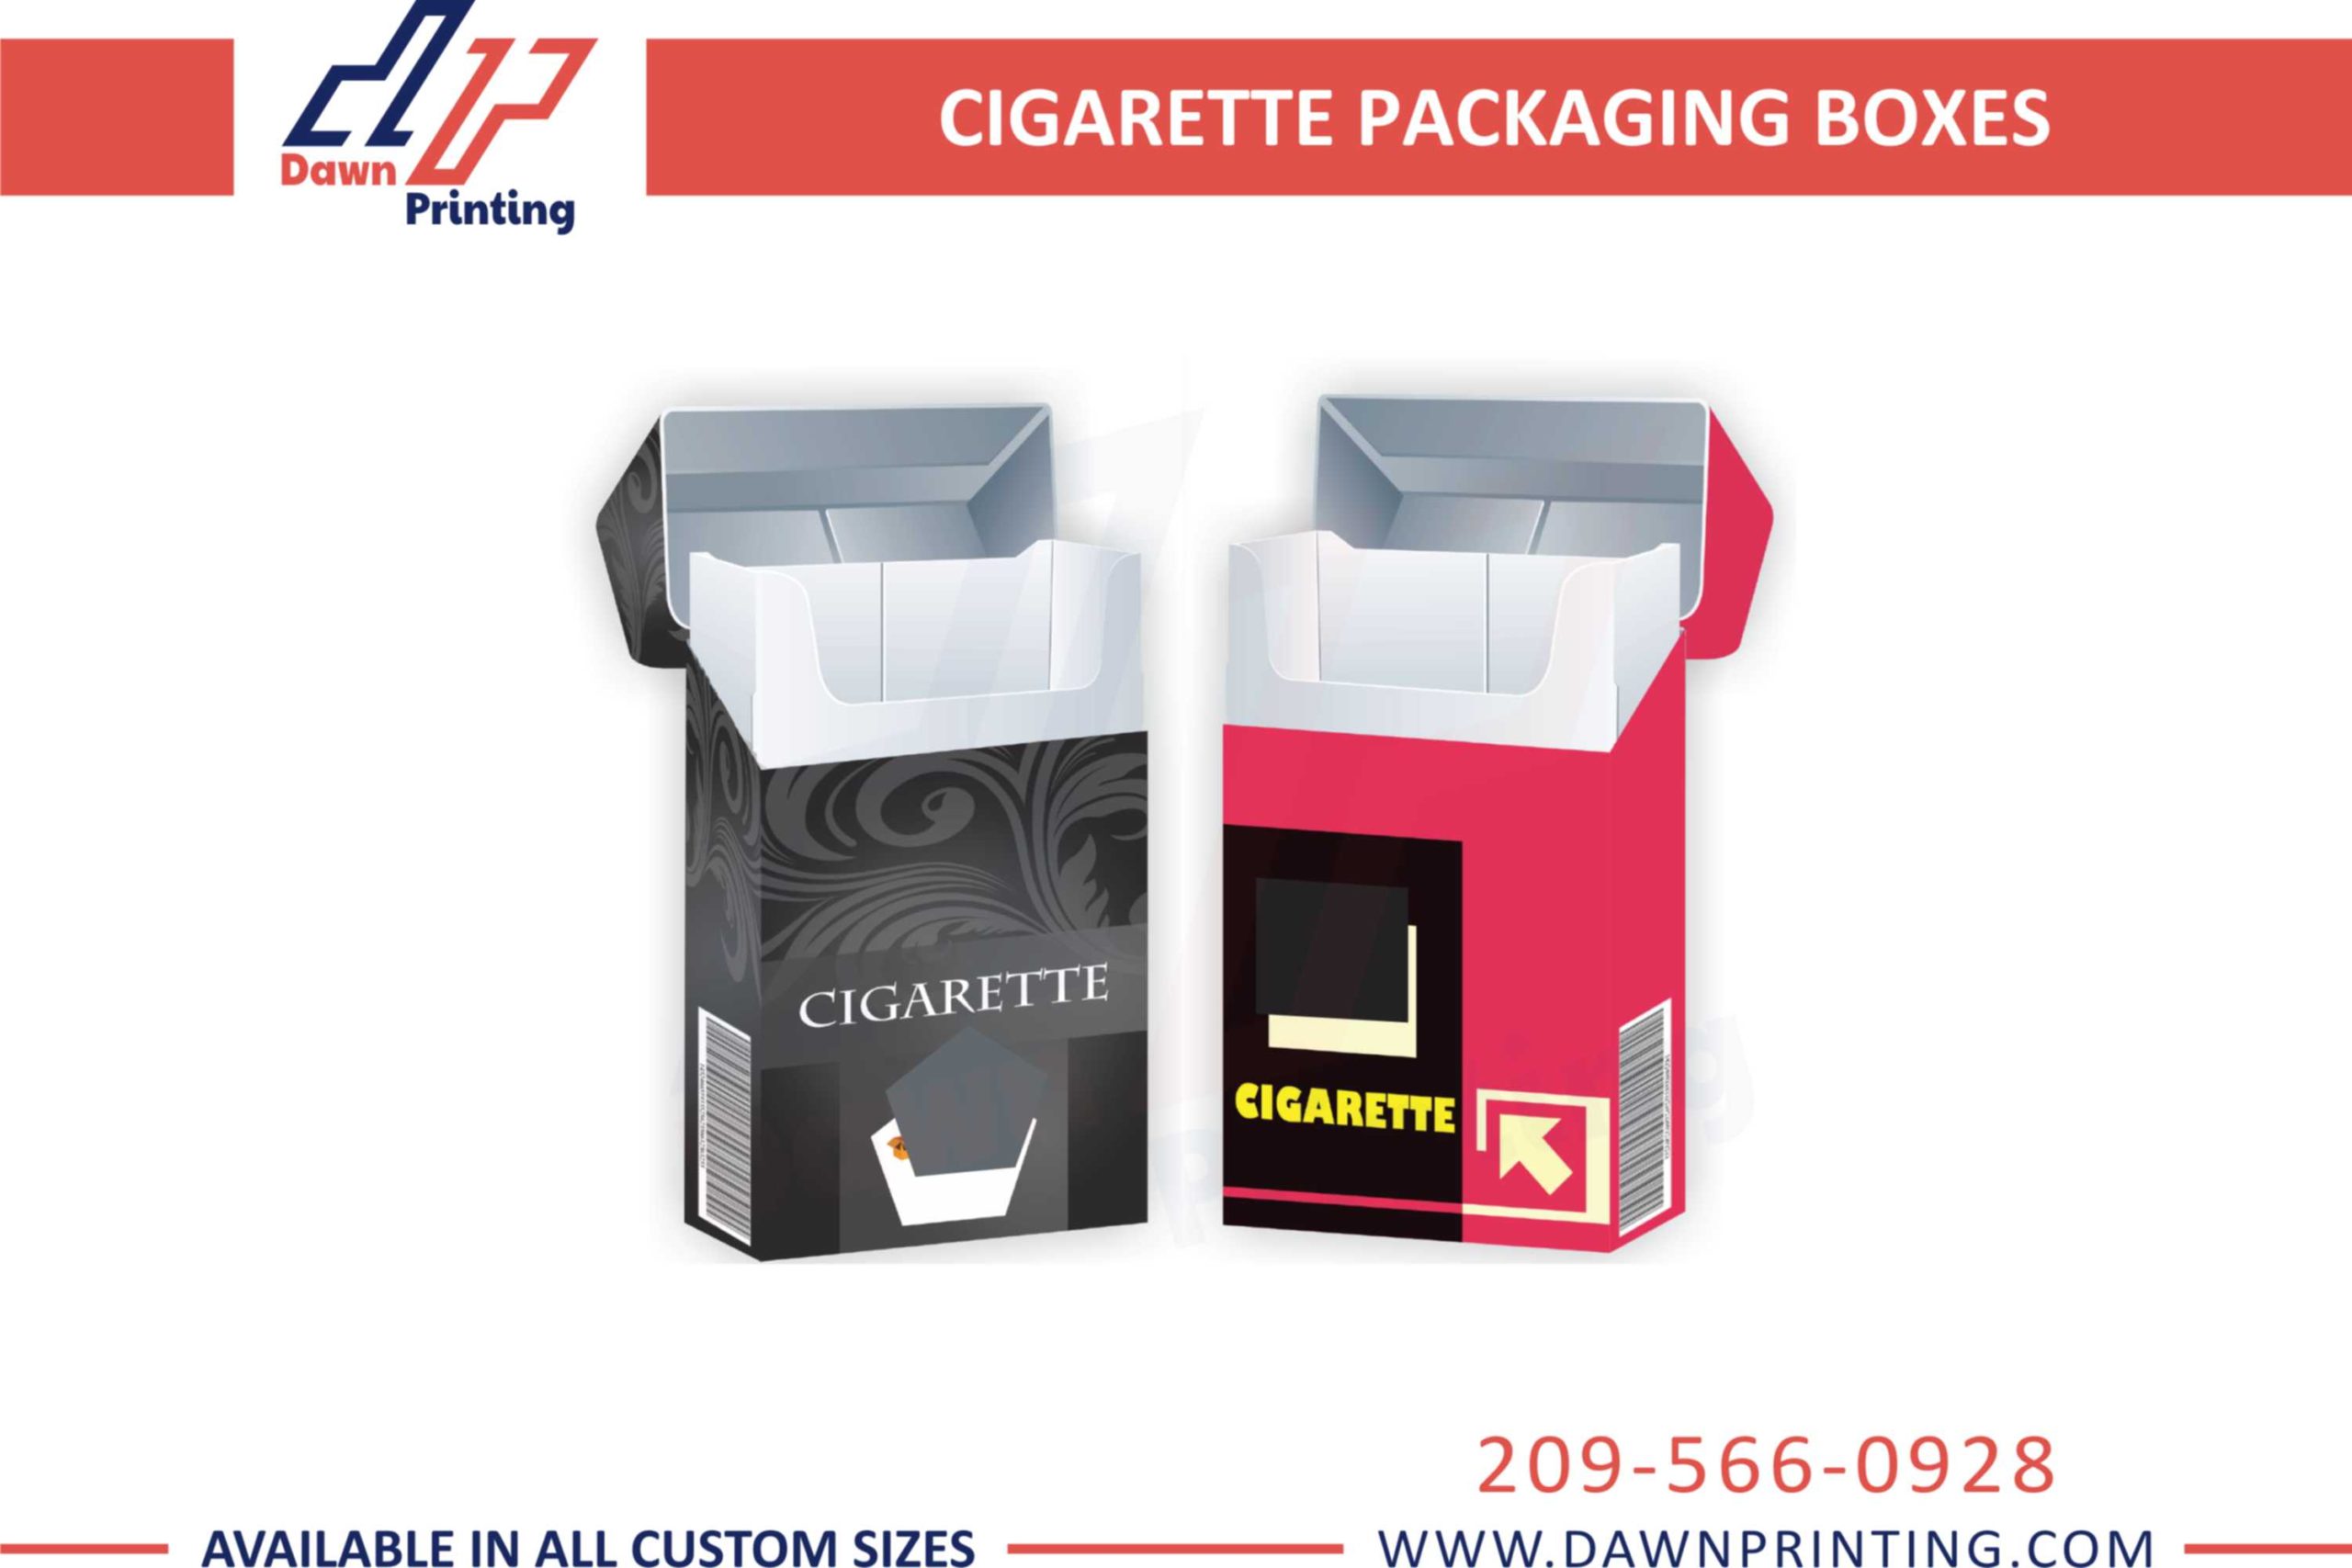 Custom made Cigarette Boxes - Dawn Printing